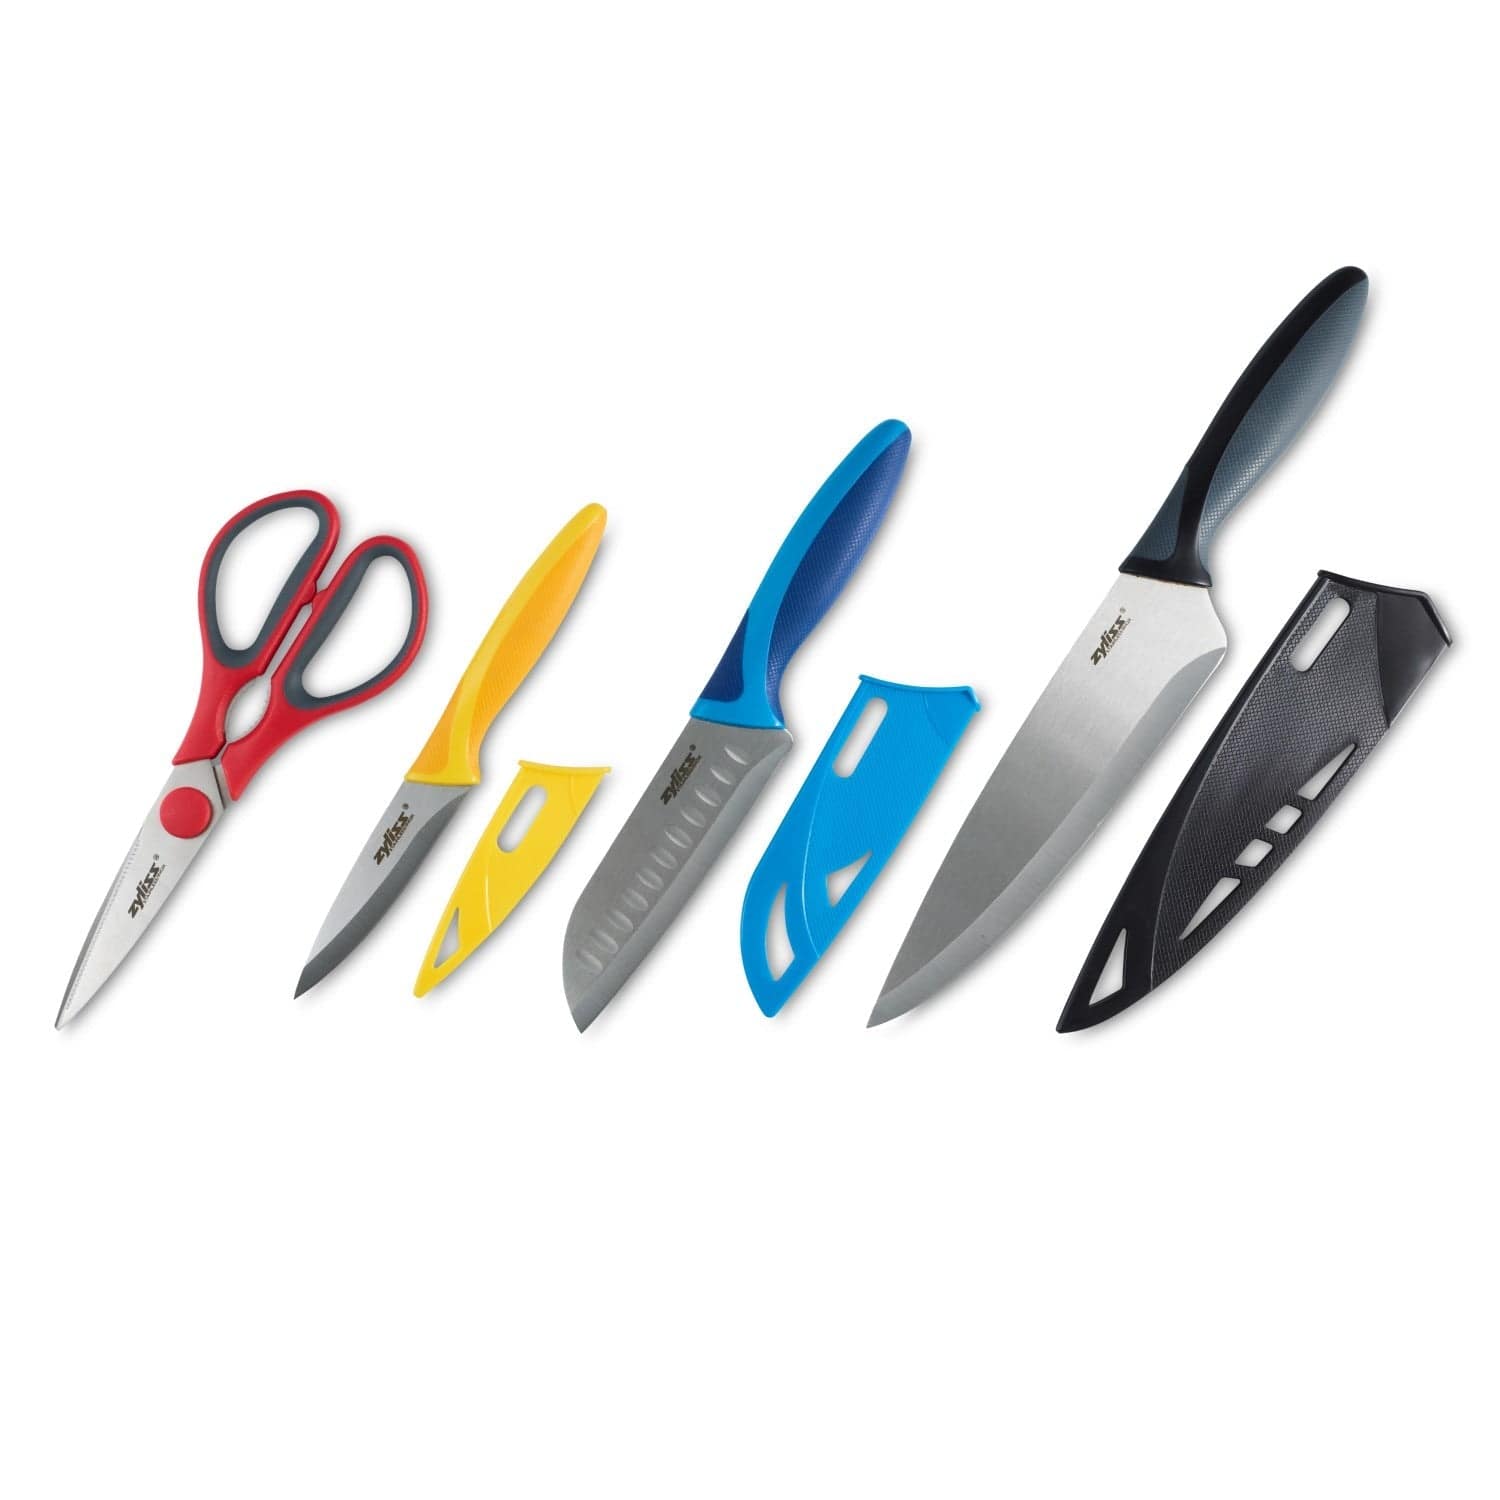 4 Piece Knife and Scissor Starter Value Set